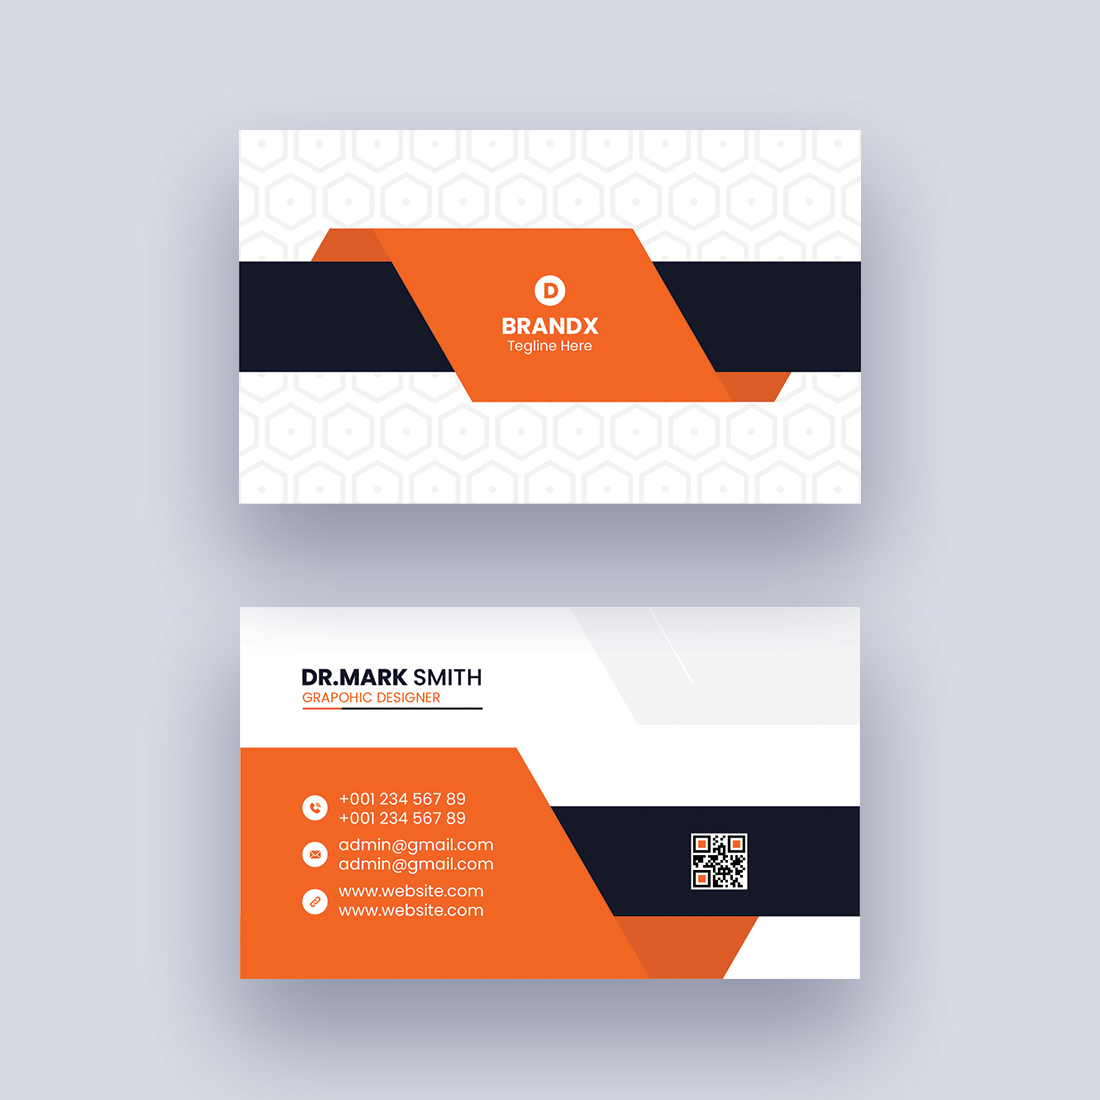 2.businesscard design 357